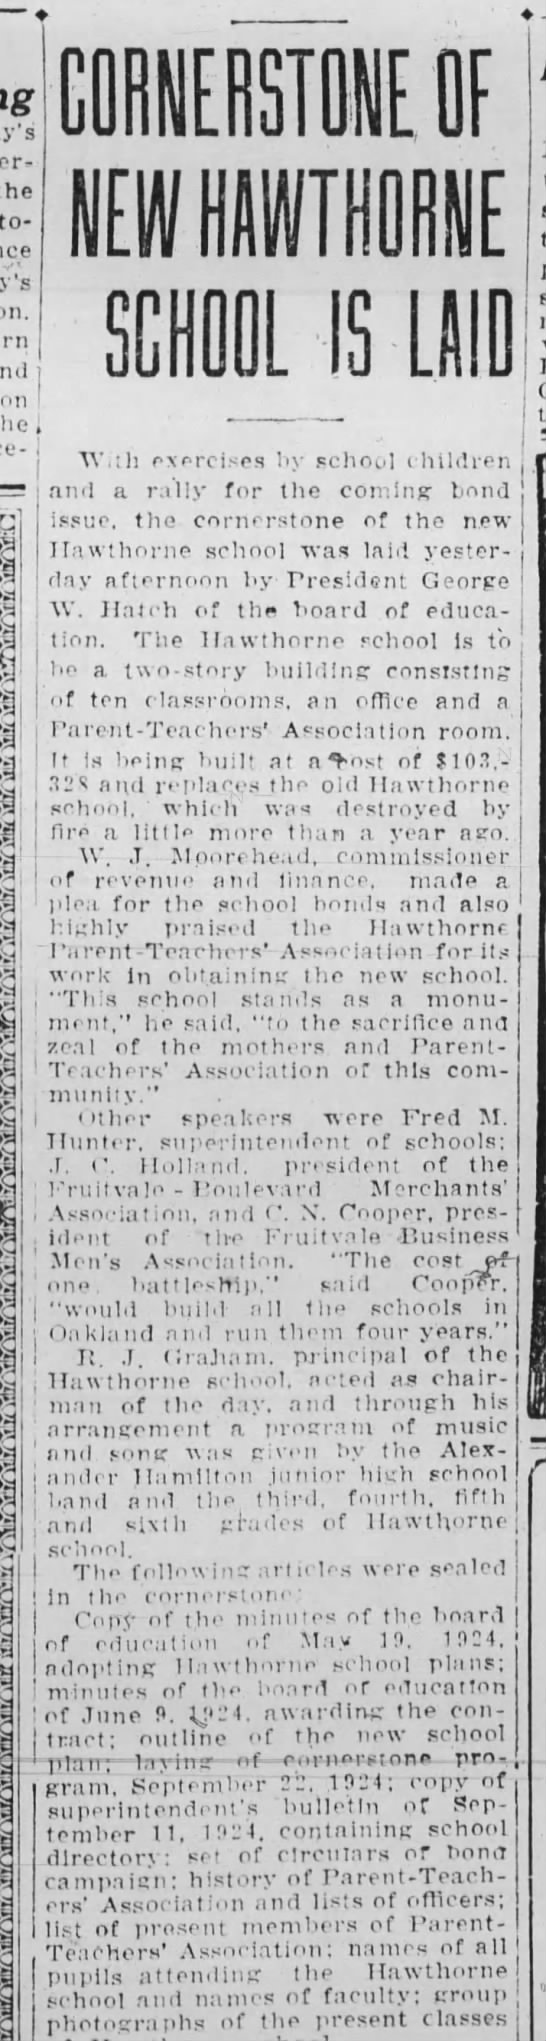 The cornerstone of New Hawthorne Schoo is Laid - Sep 23, 1924 - 